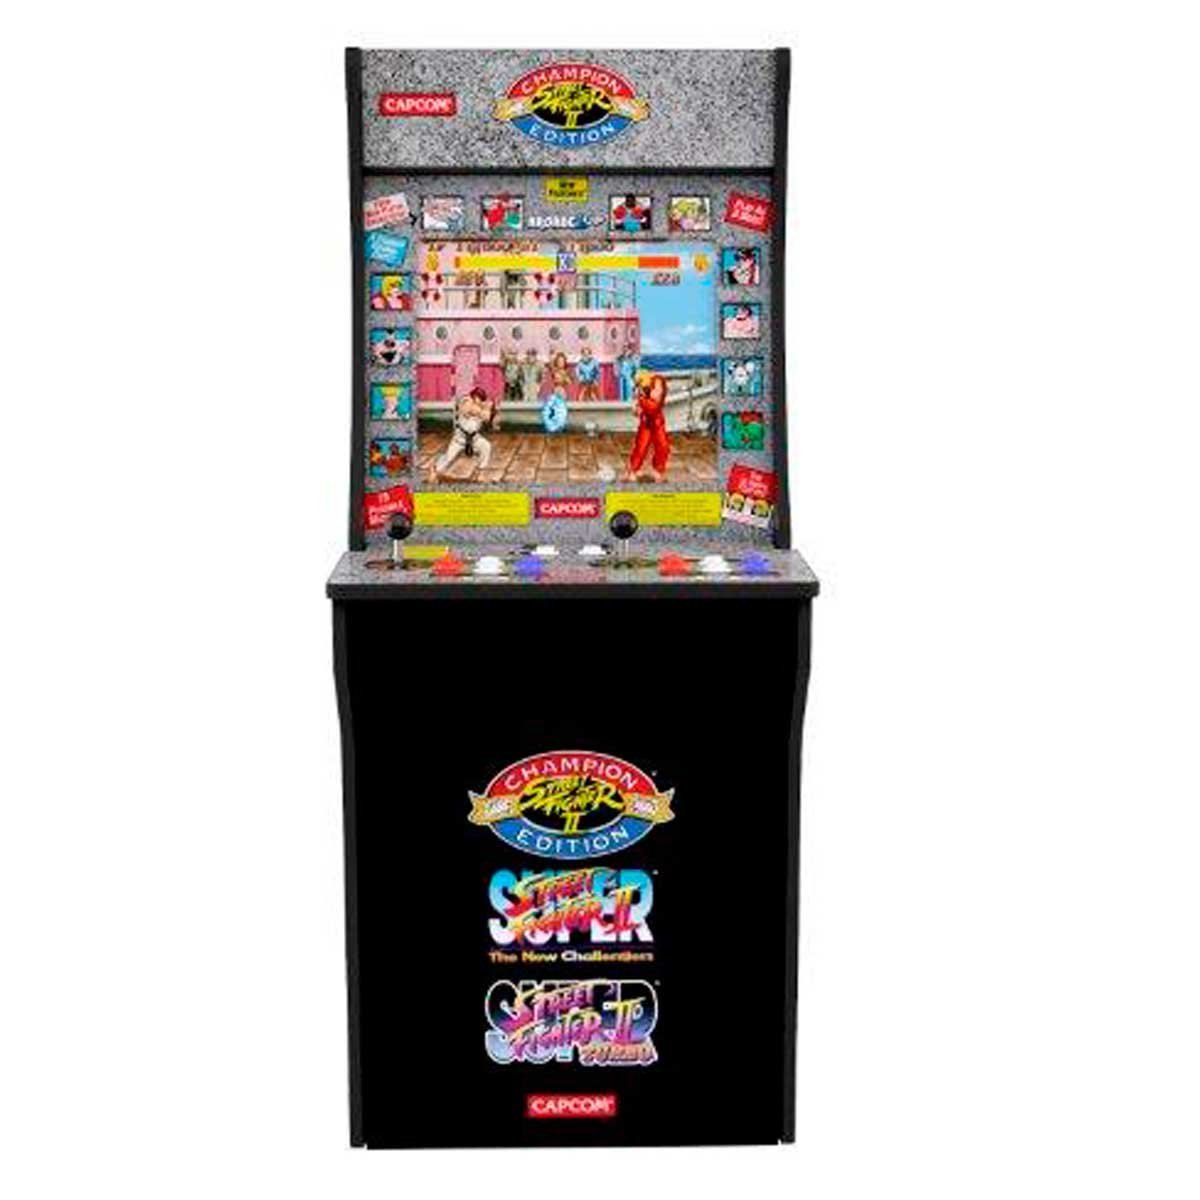 Consola Arcade Street Fighter II